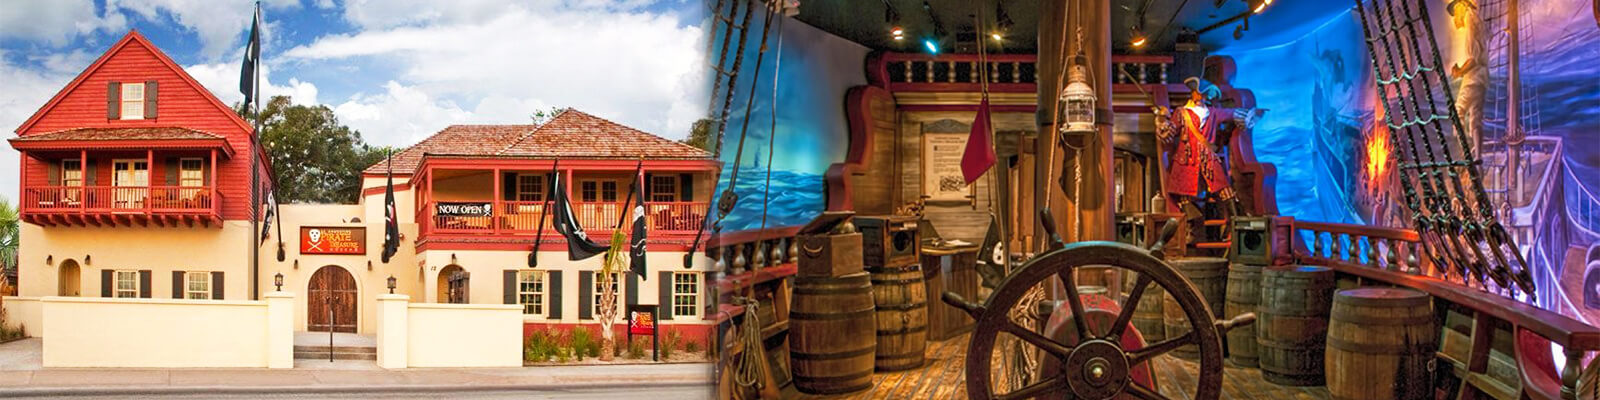 St Augustine Pirate Treasure Museum Coupons